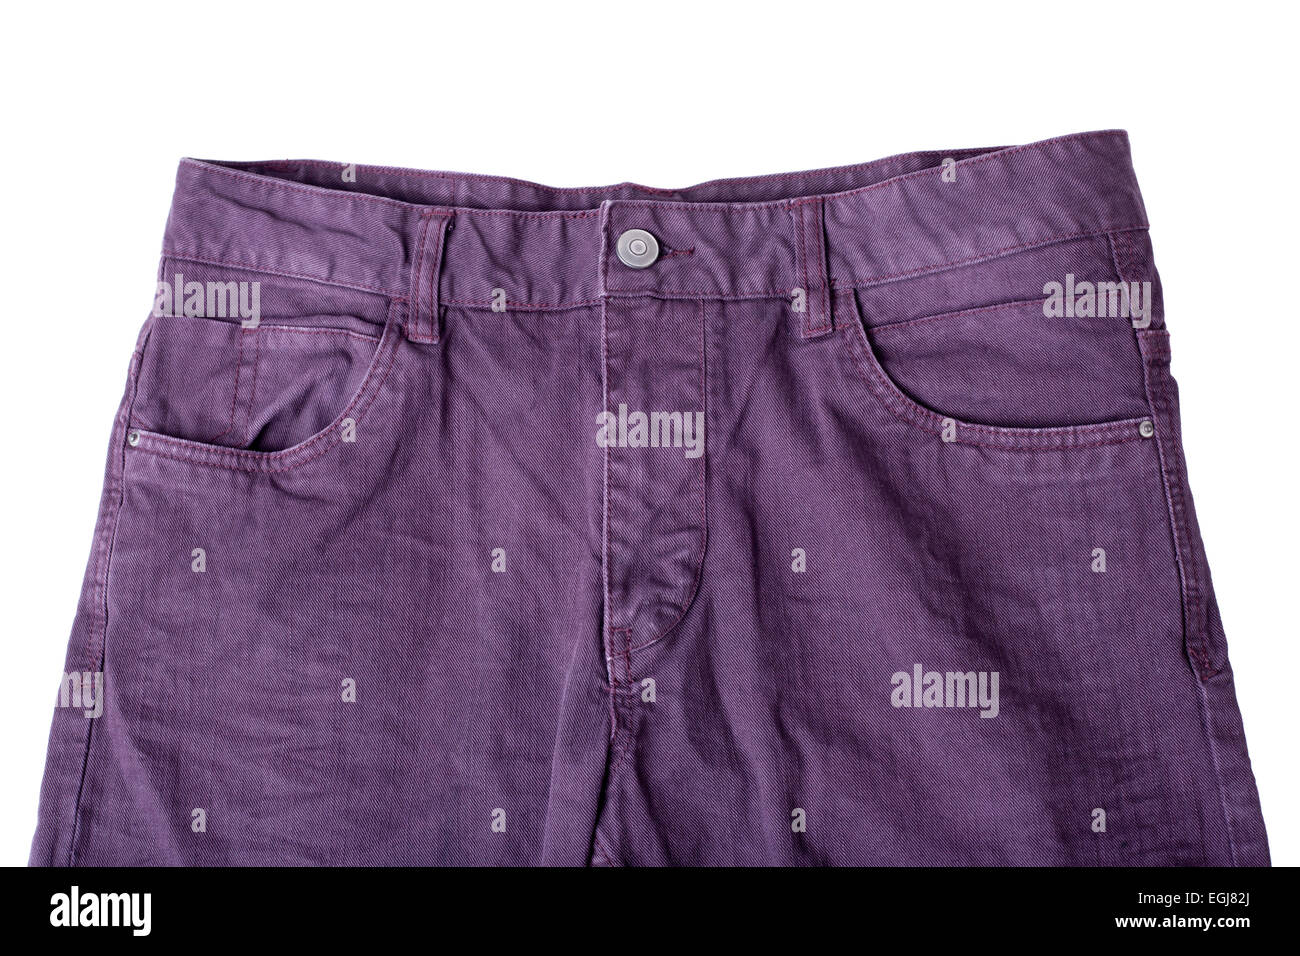 Lila jeans -Fotos und -Bildmaterial in hoher Auflösung – Alamy